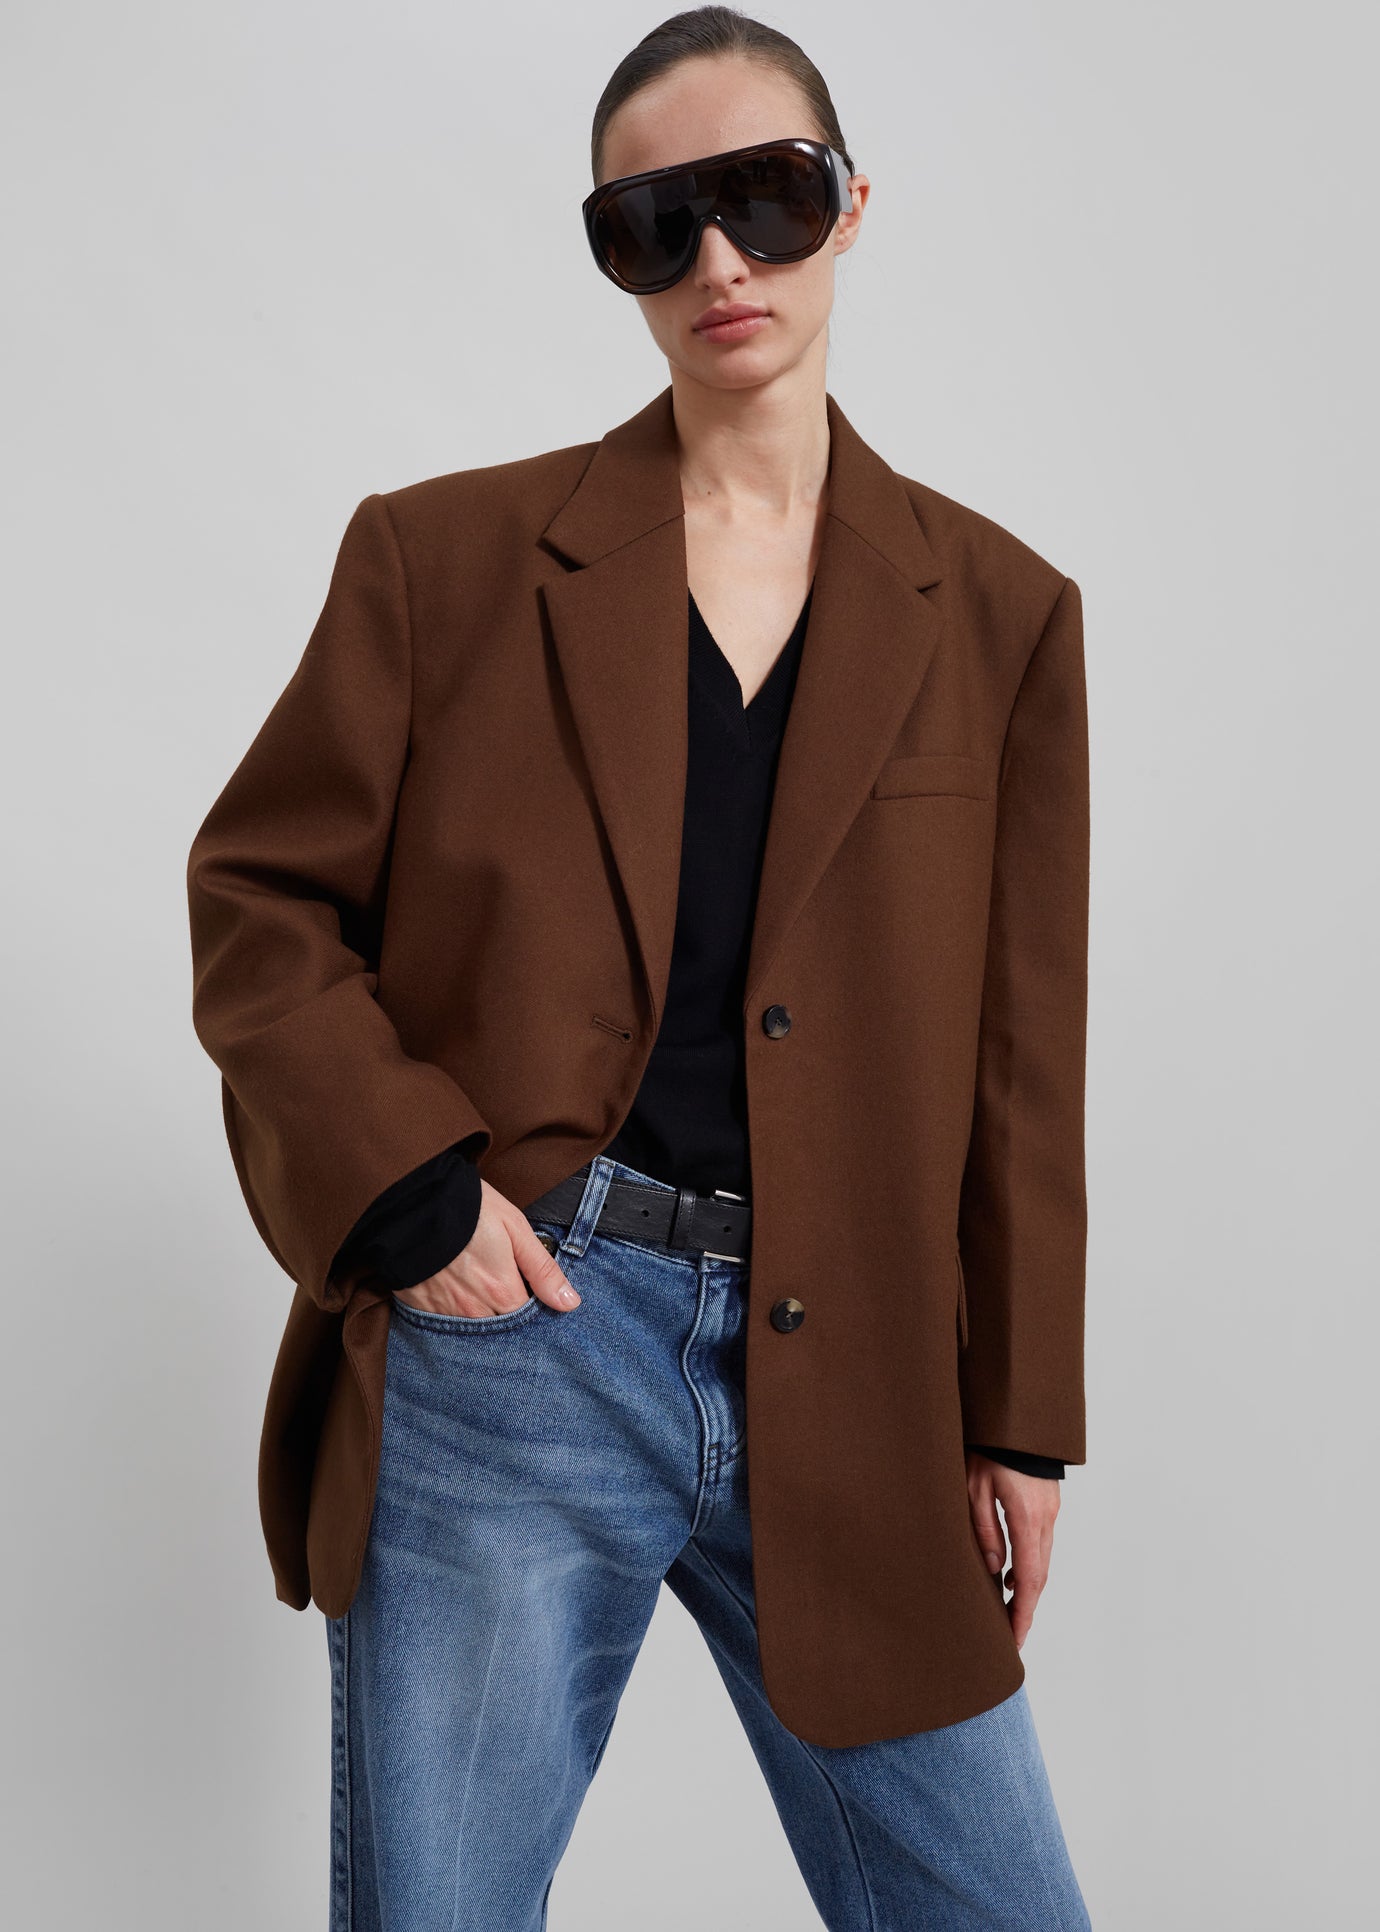 Women\'s Coats, Jackets, Trench & Blazer – Page 2 – The Frankie Shop